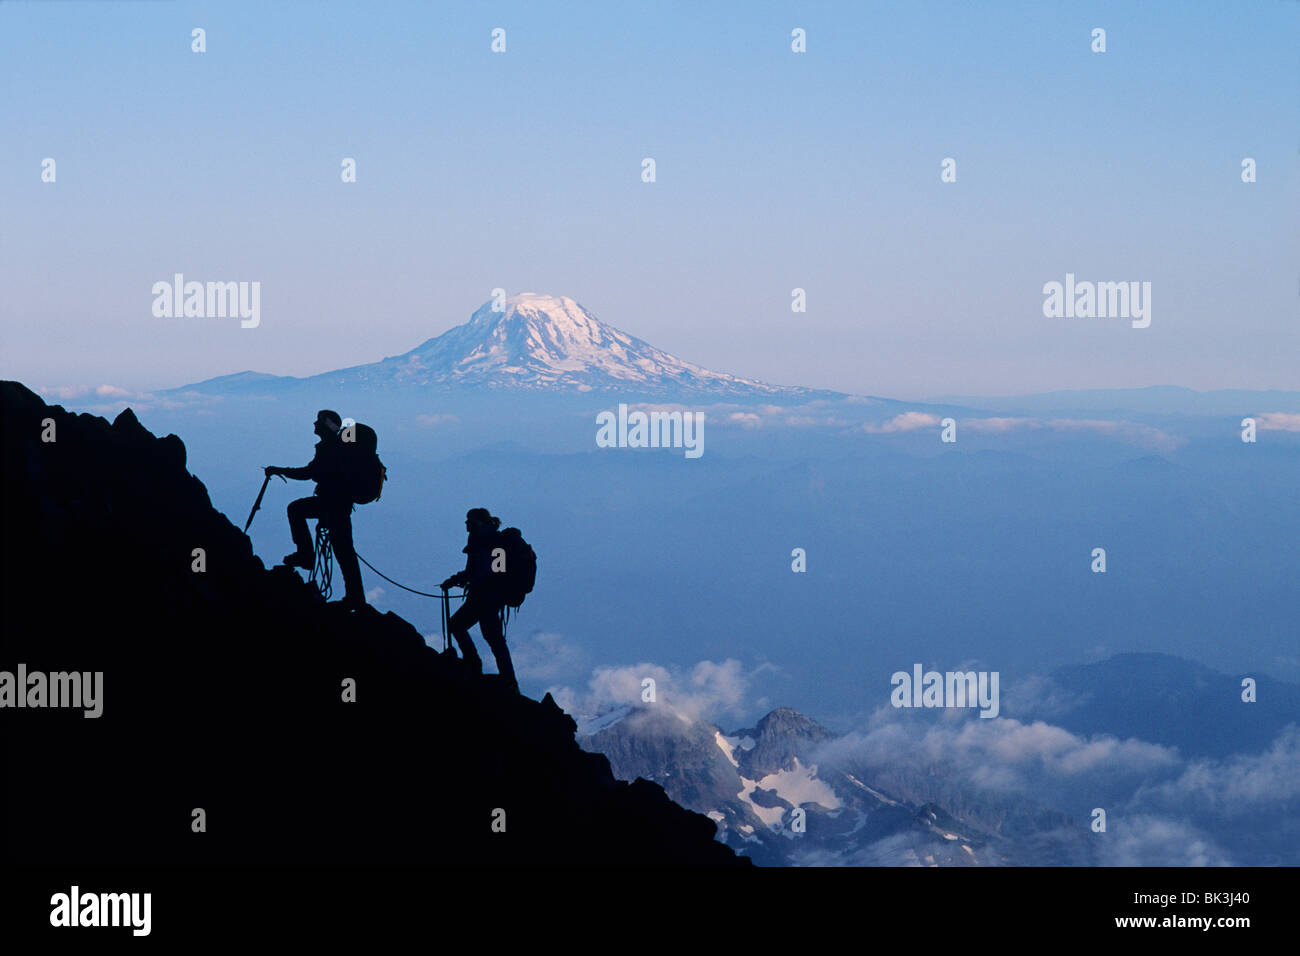 Mount Adams Summit Hike - Hiking in Portland, Oregon and Washington